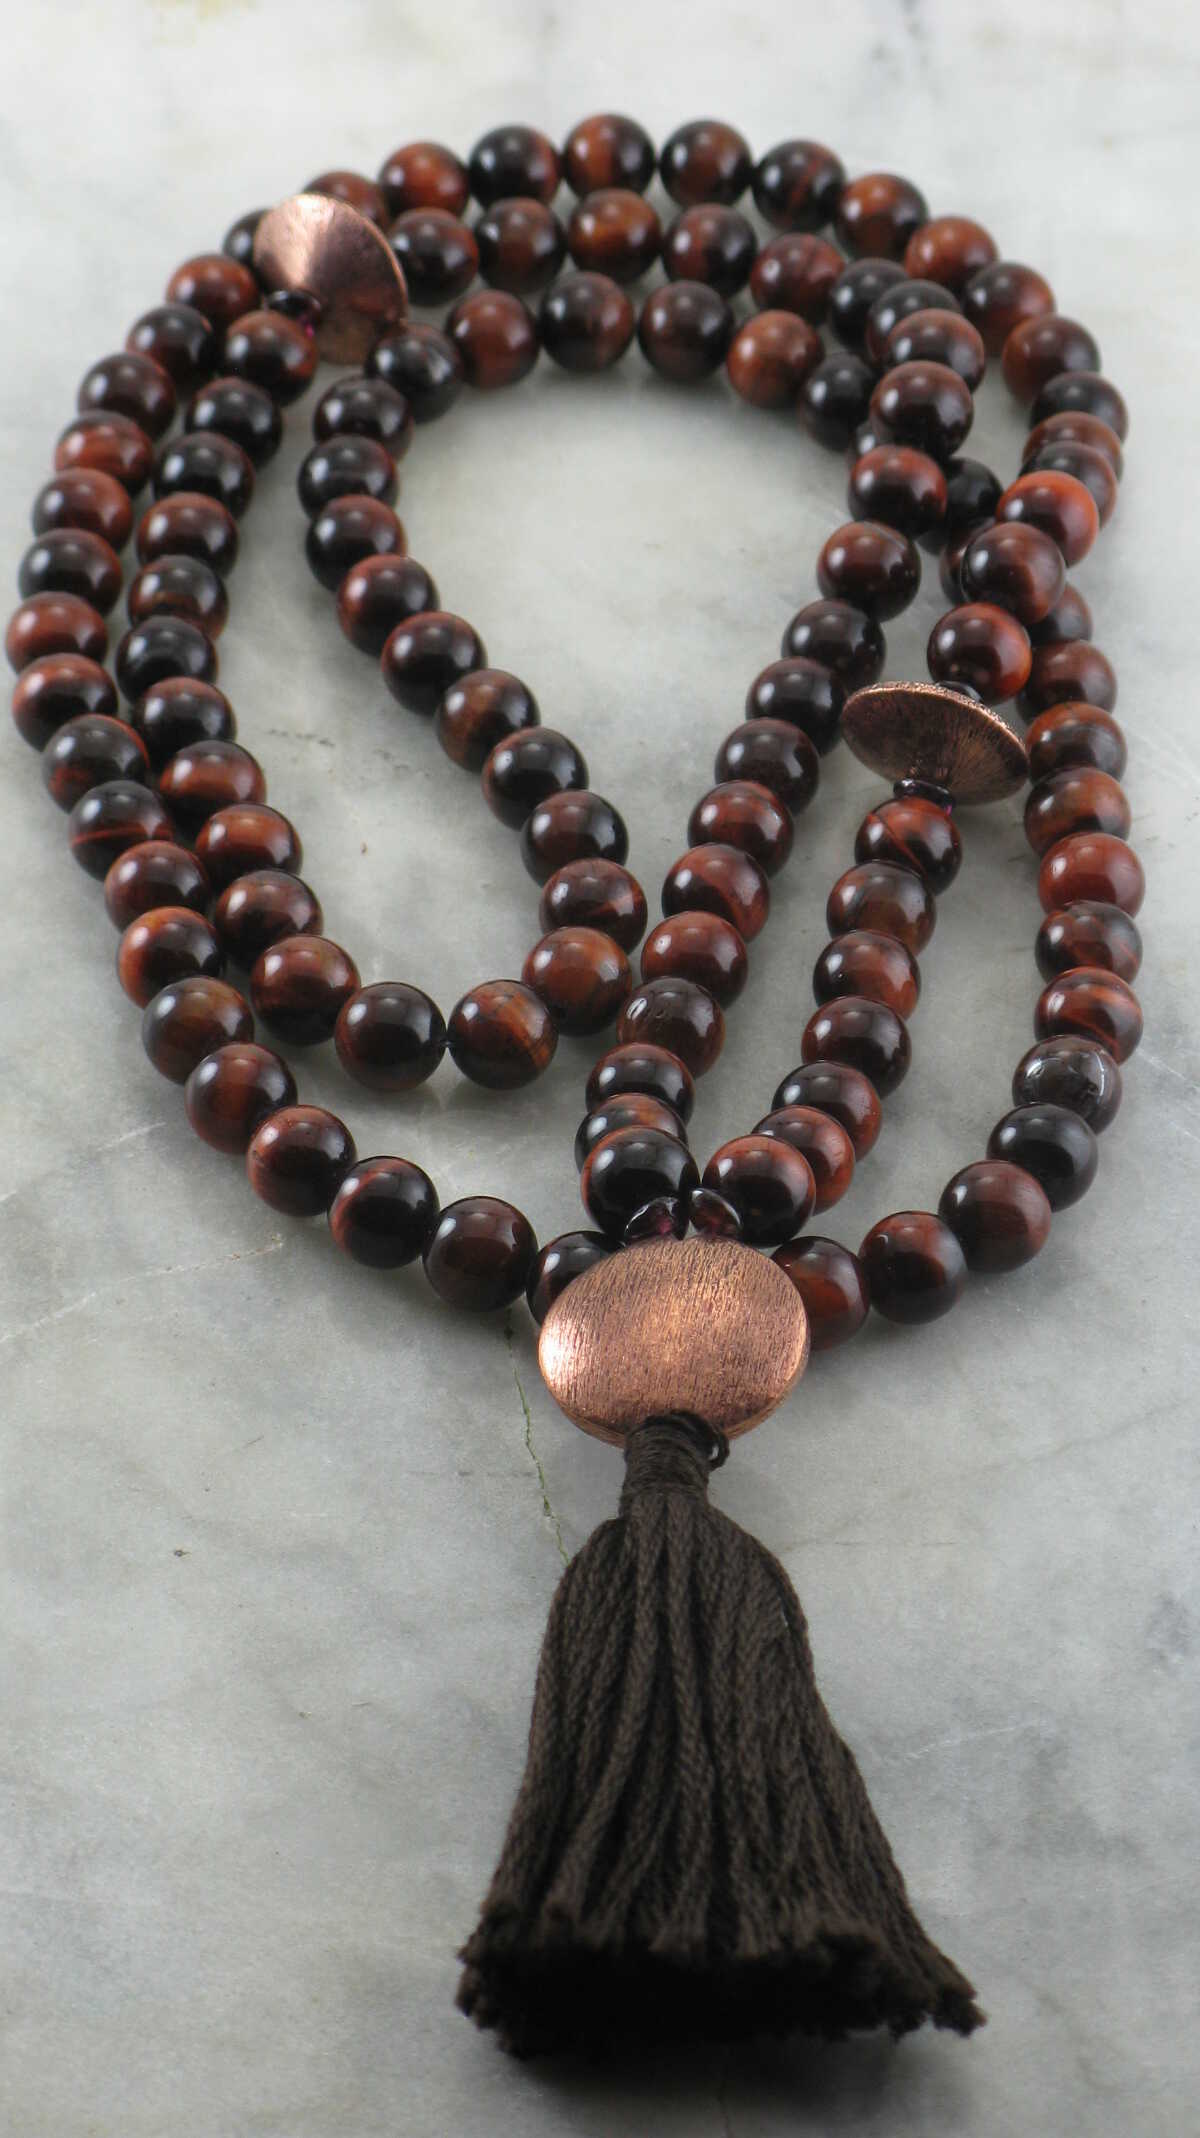 Botswana Agate Bracelet Necklace 8-mm Beads with a Beaded Tassel 1185 Mala Prayer Beads 108 and Guru